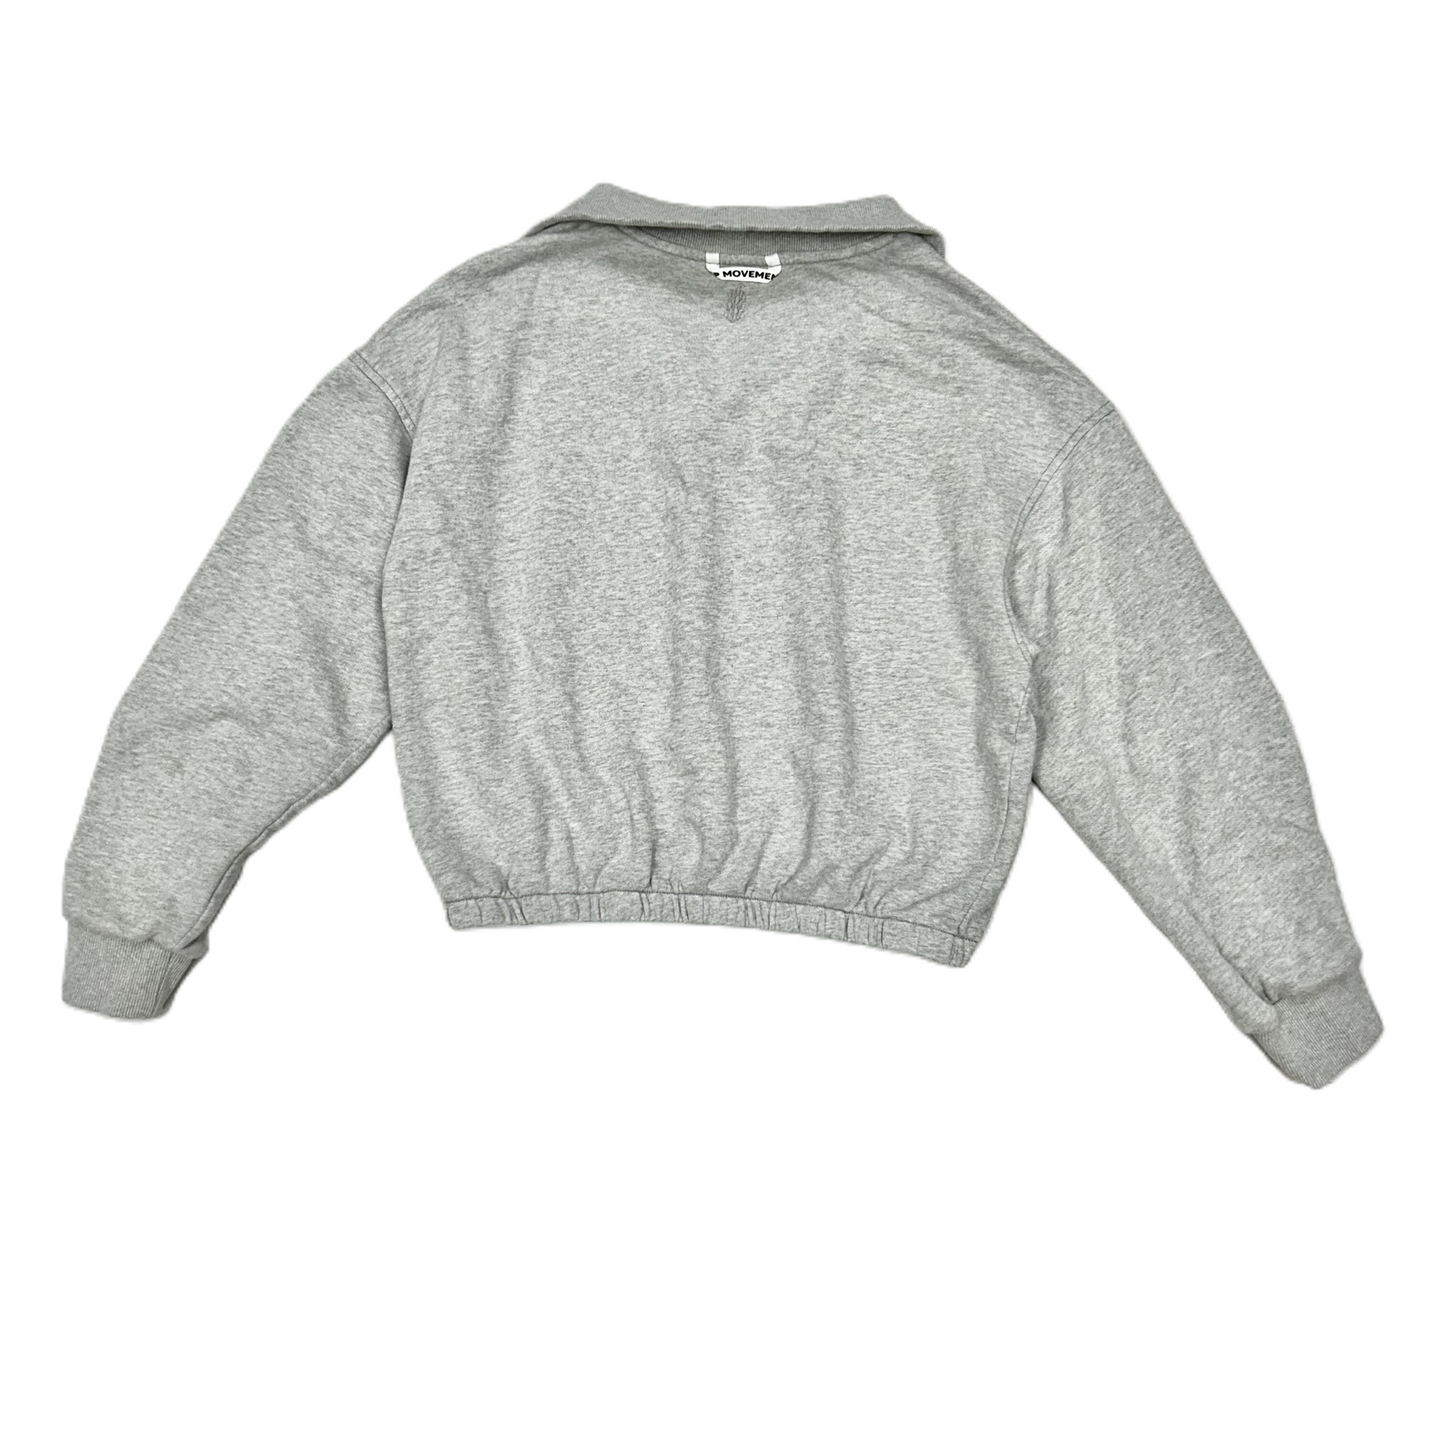 Grey Athletic Sweatshirt Collar By Free People, Size: M